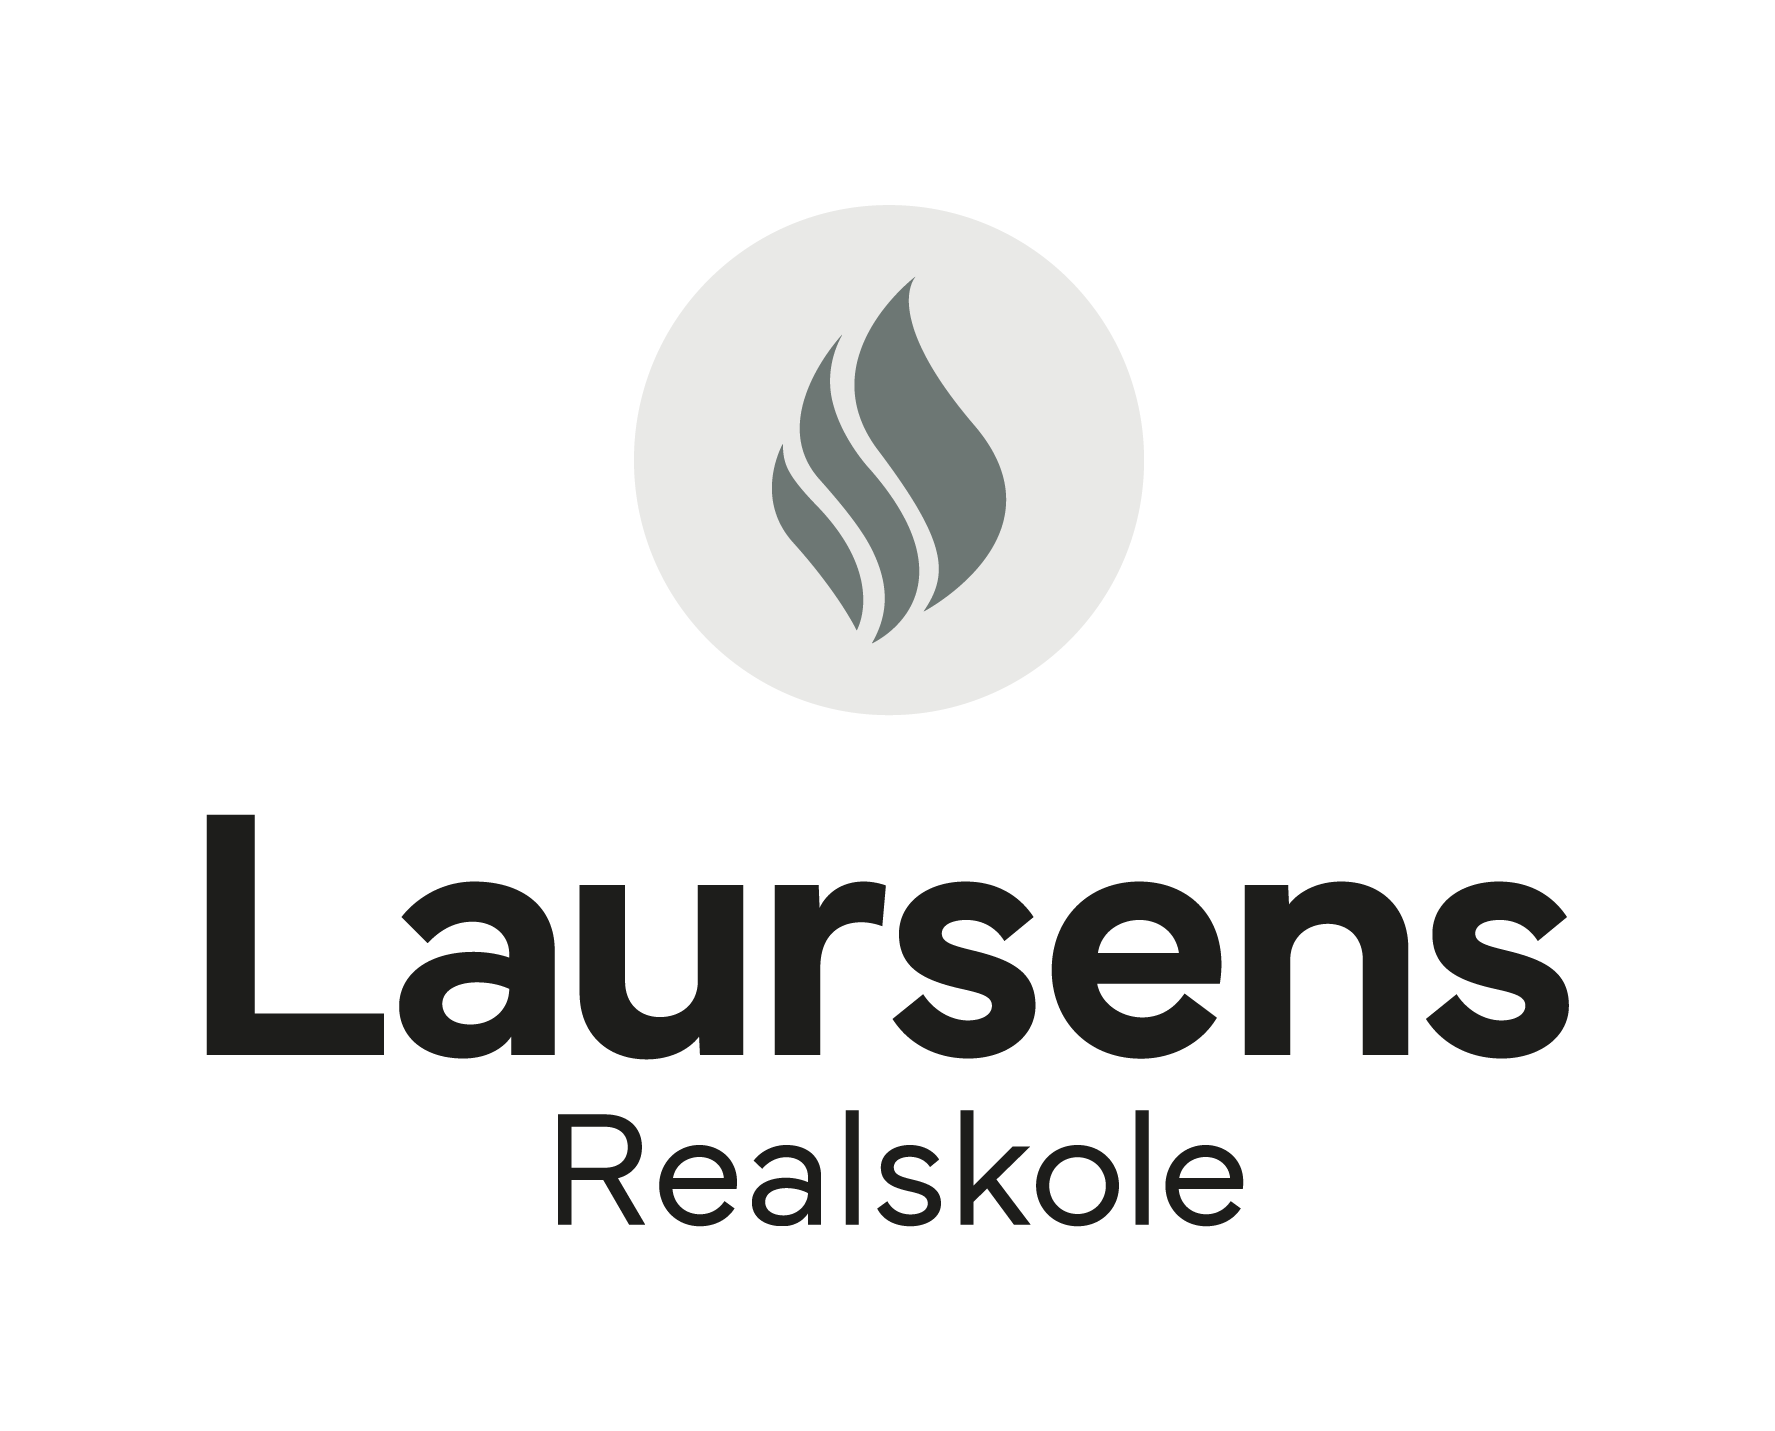 Laursens Realskoles logo